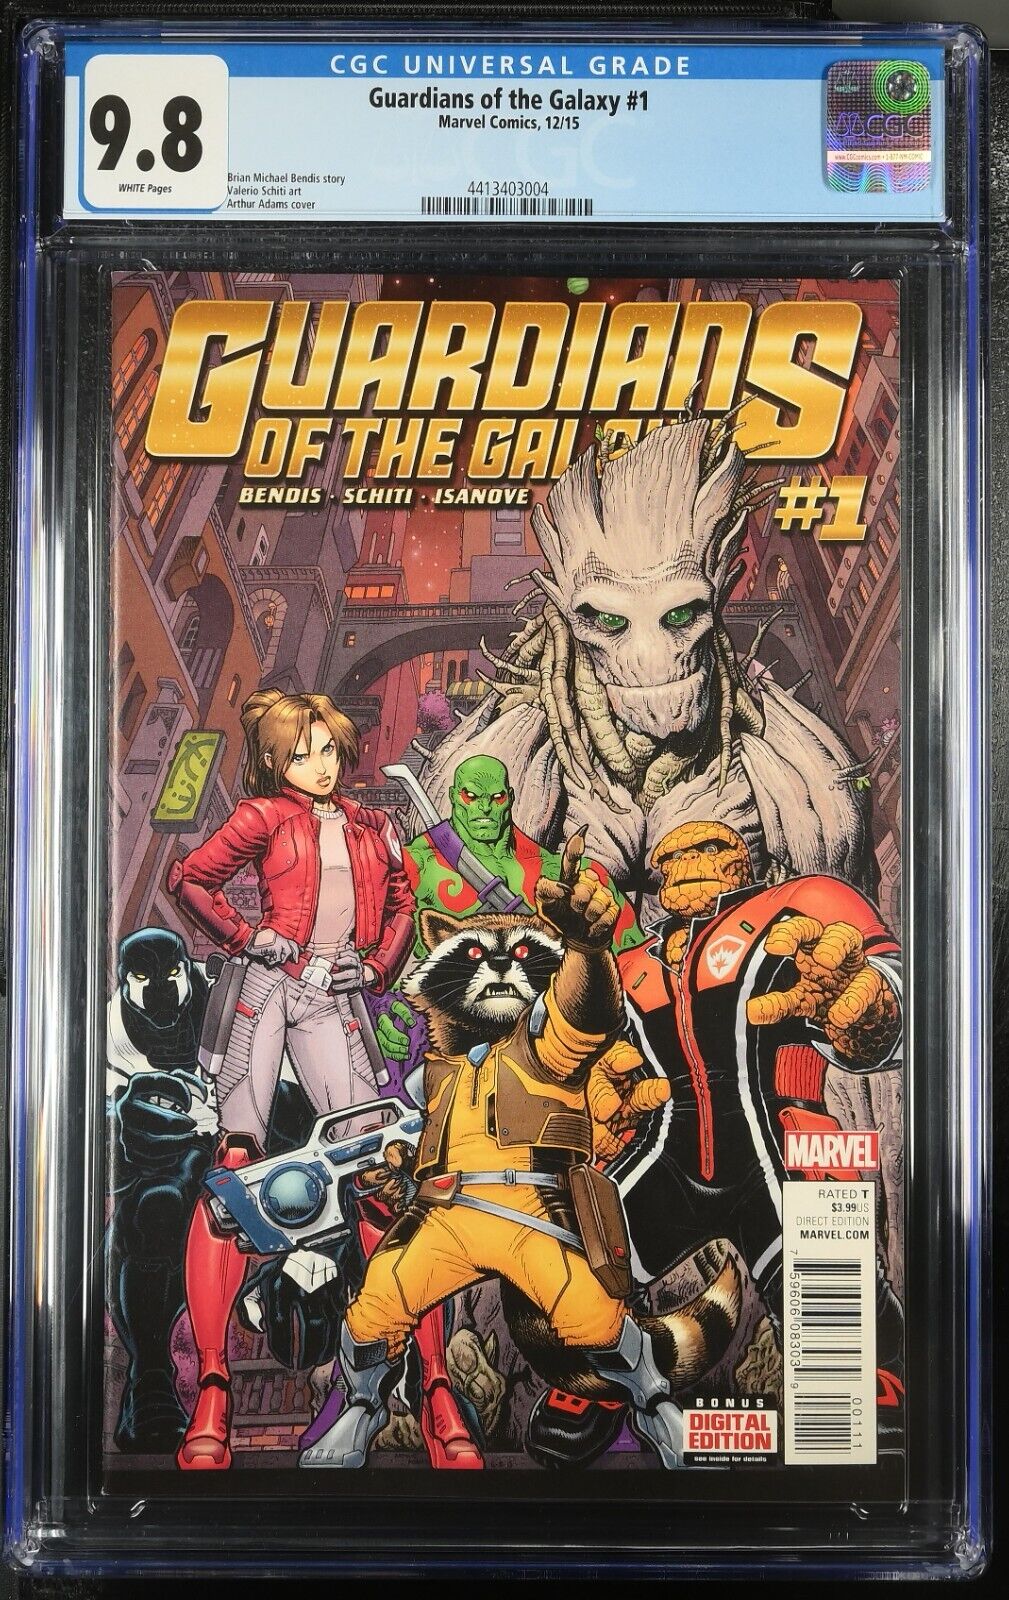 GUARDIANS OF THE GALAXY #1 CGC 9.8 Marvel Comics 2015 Arthur Adams cover